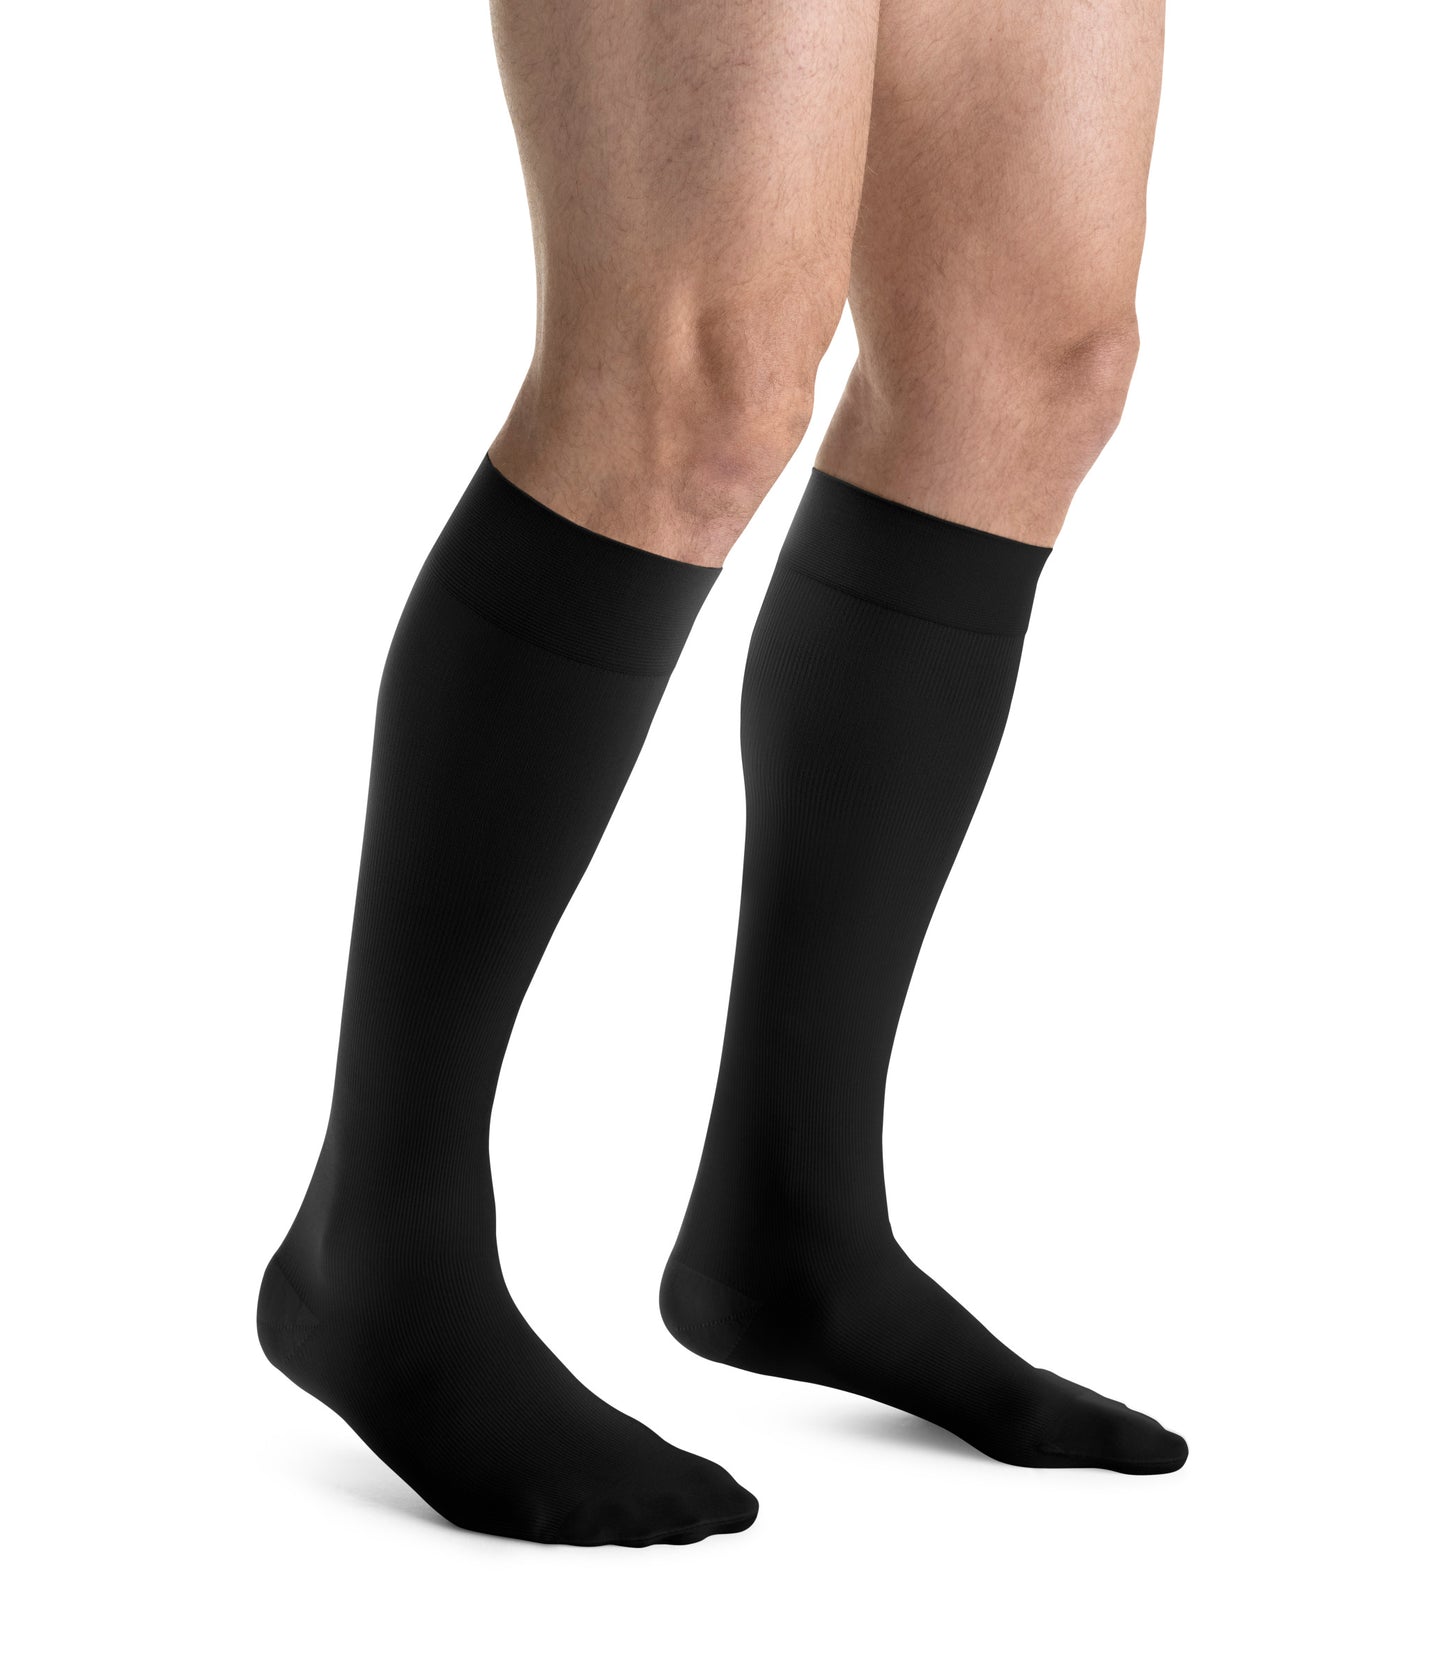 JOBST forMen Compression Socks 30-40 mmHg Knee High Closed Toe